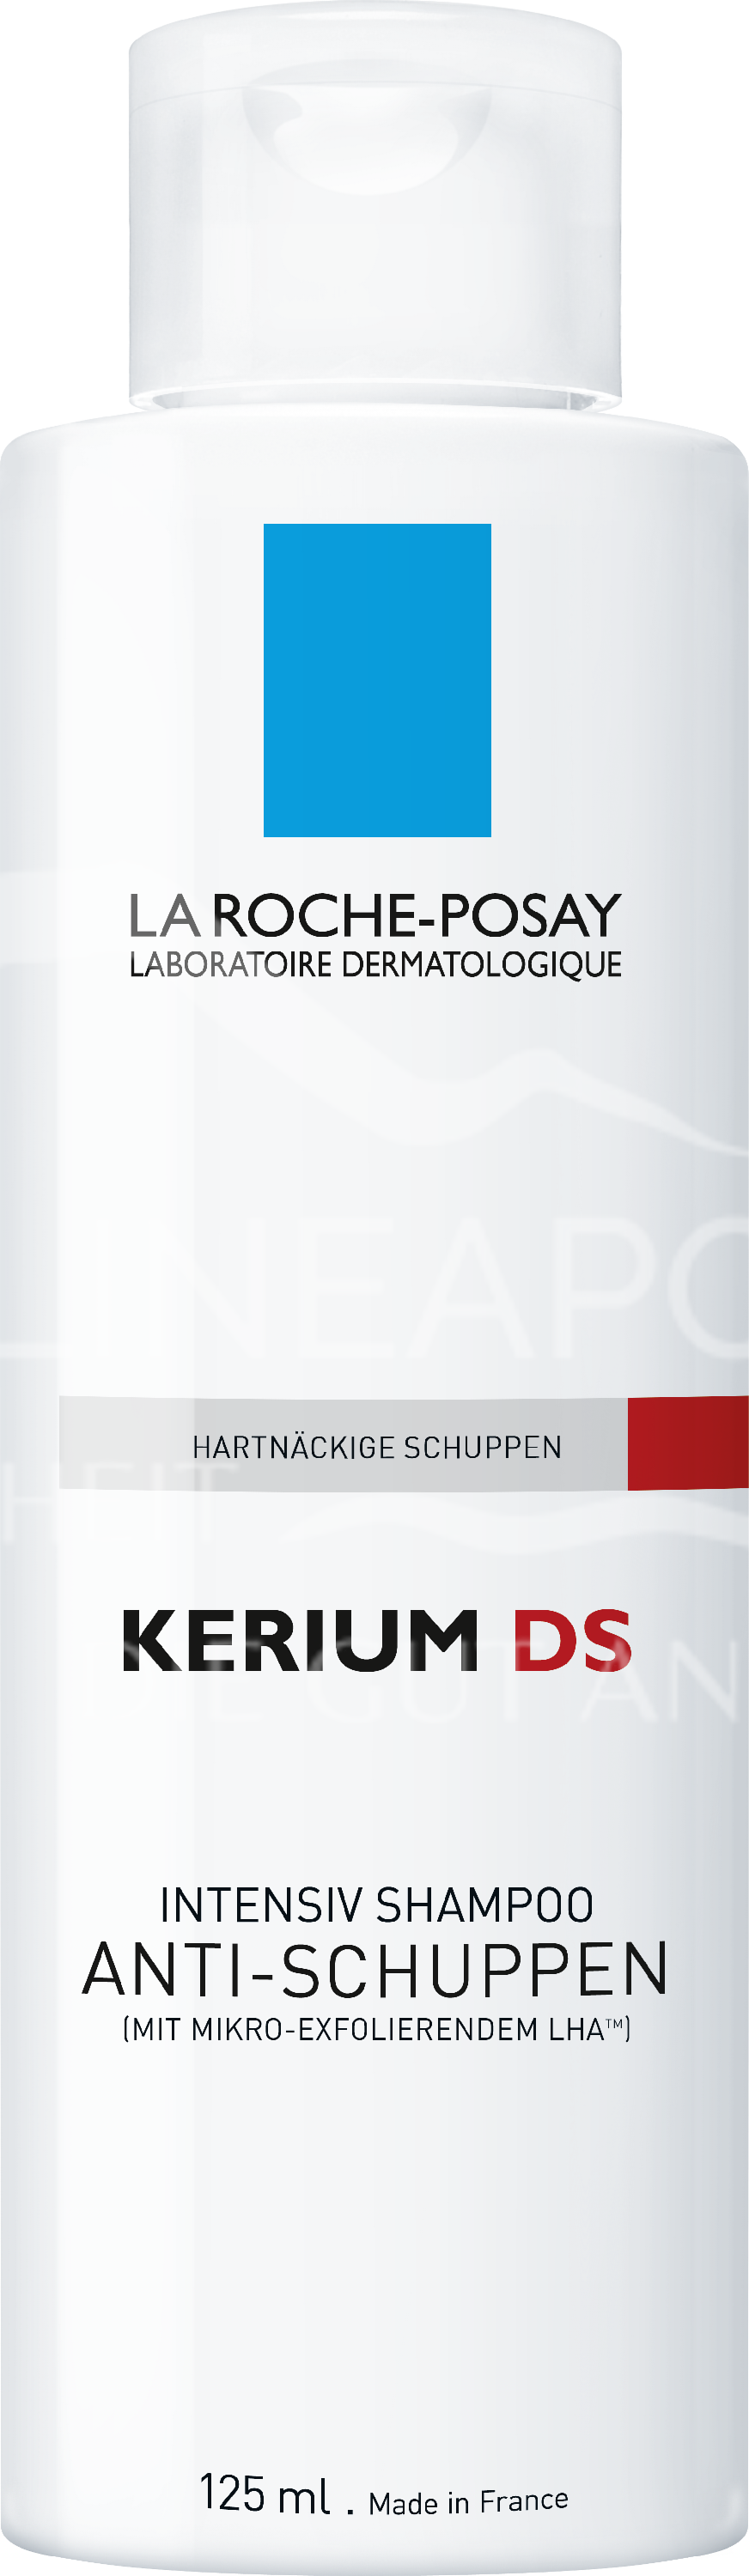 La Roche-Posay Kerium DS Anti-Schuppen Intensiv Shampoo-Kur